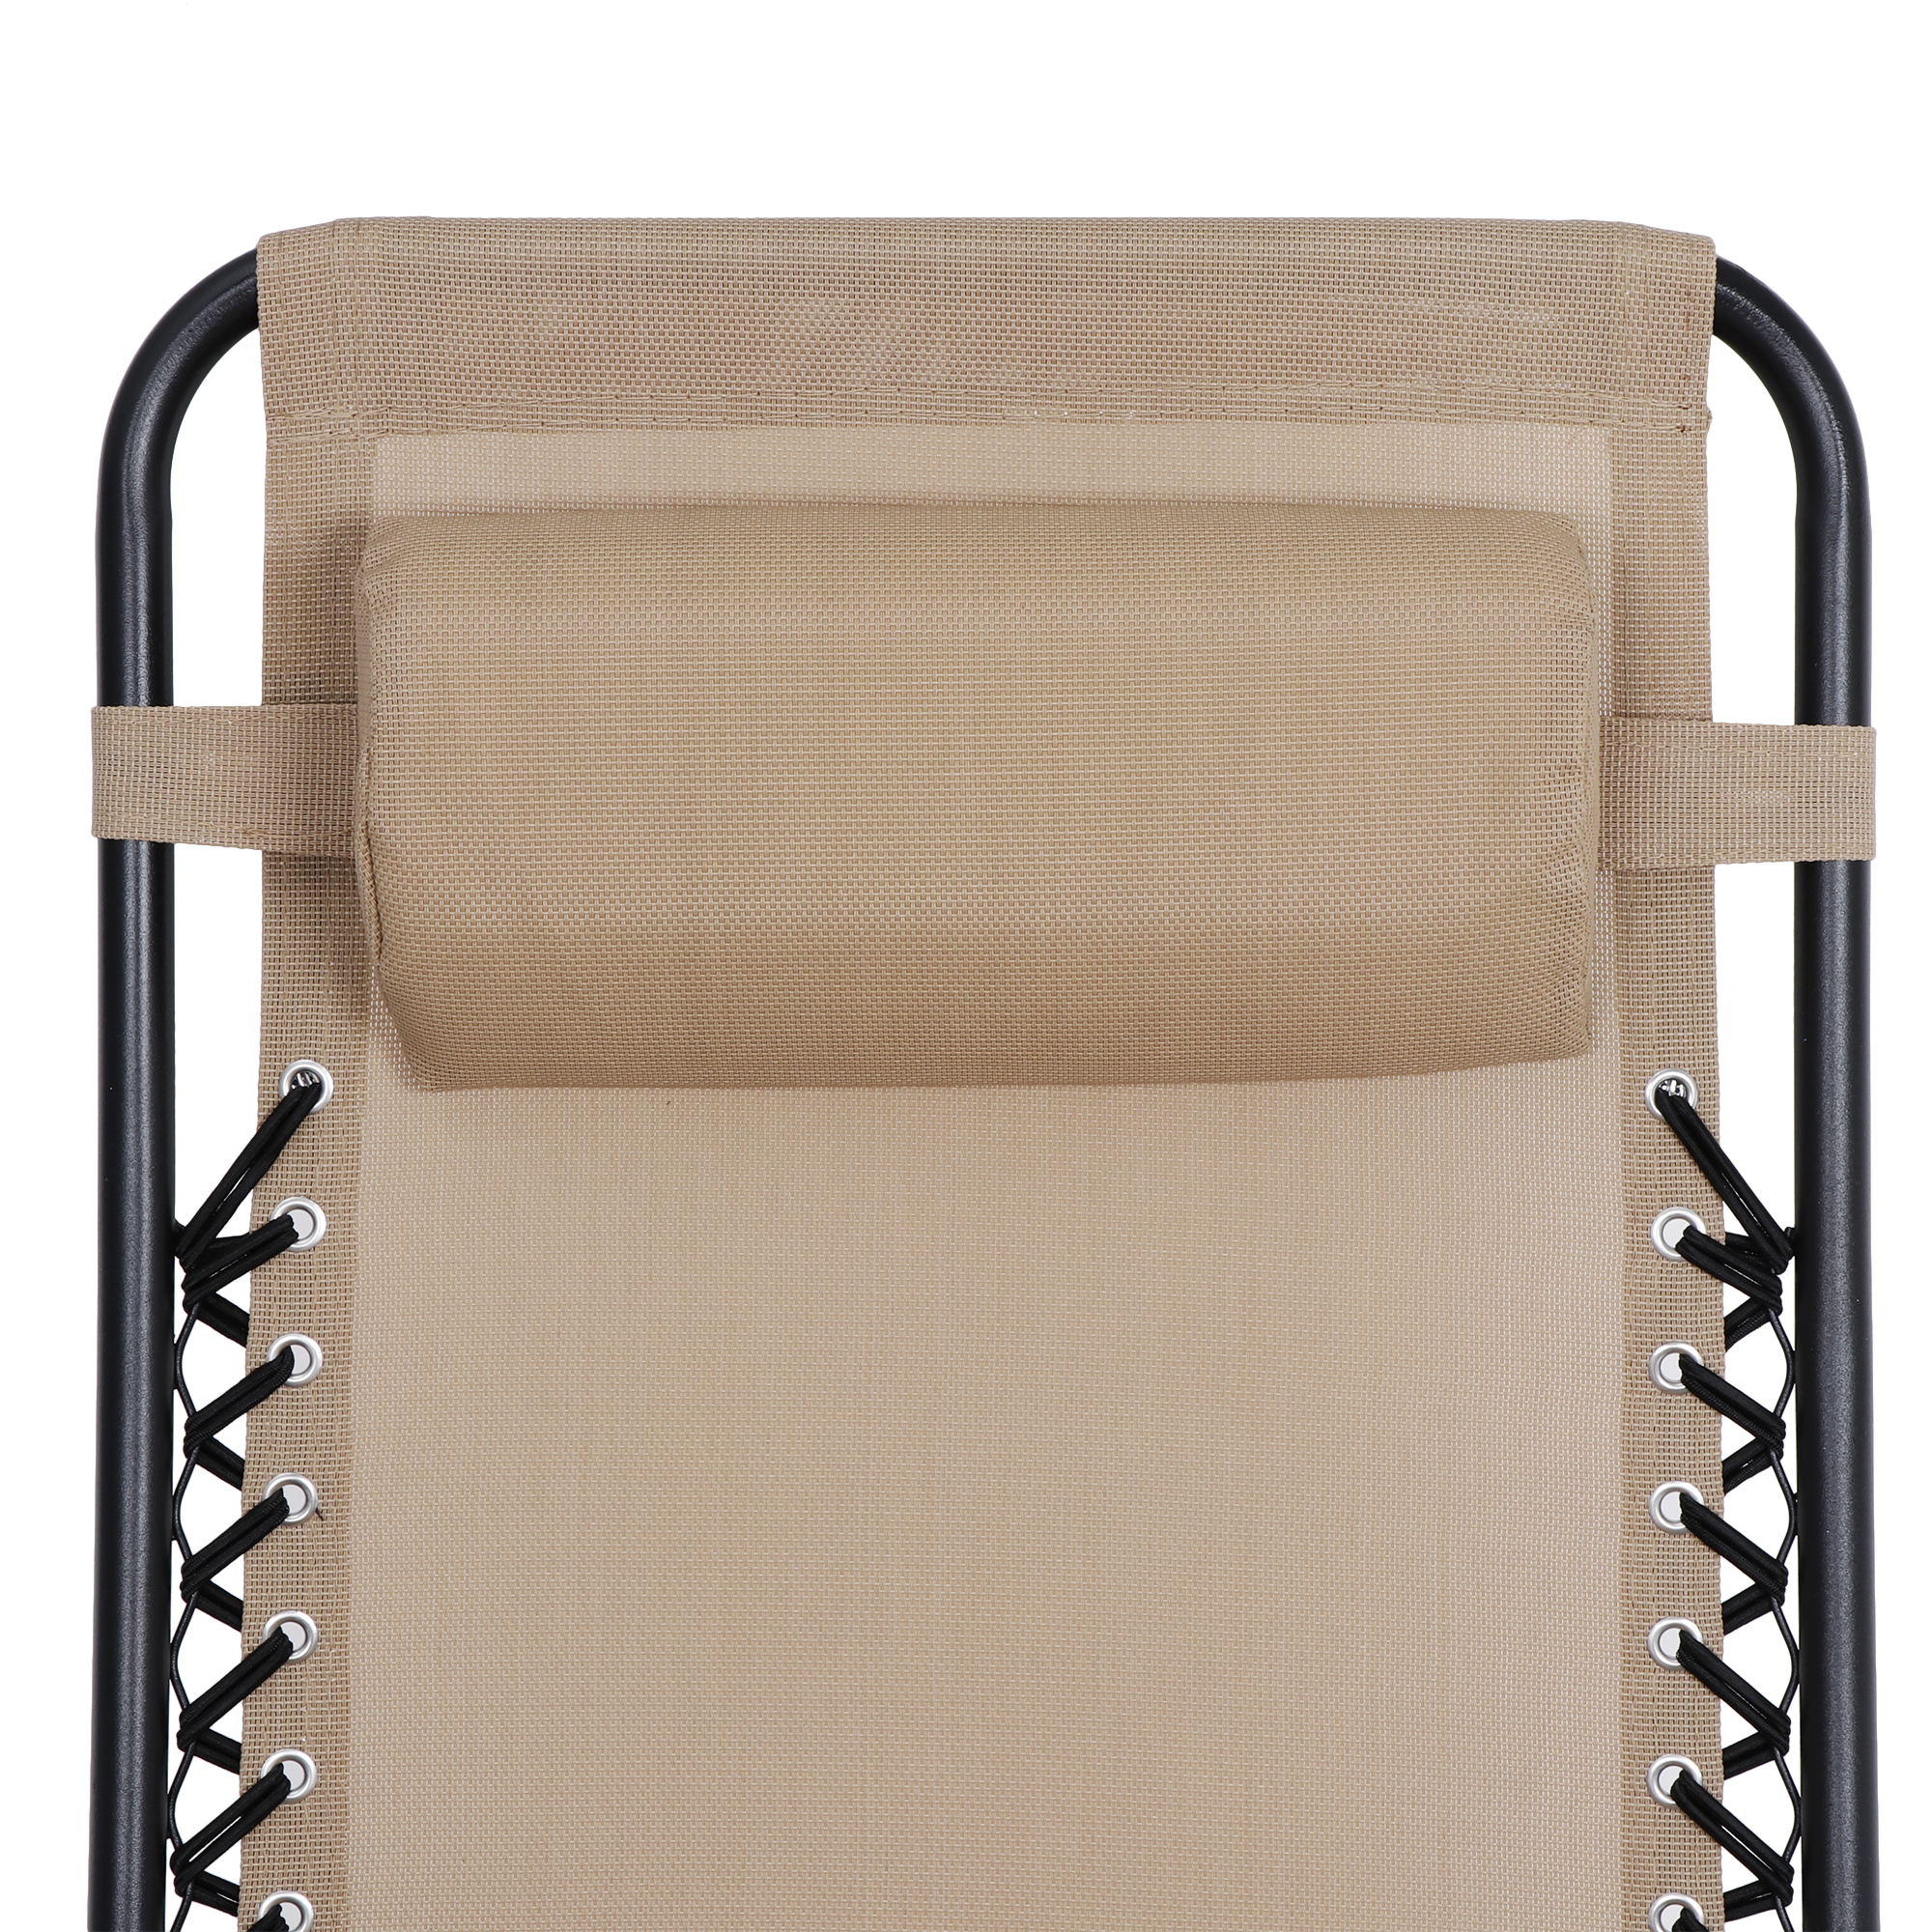 ZENSTYLE Set of 2 Adjustable Recline Chairs Zero Gravity Patio Beach Lounge 330LBS W/ Cup Holders Beige - image 3 of 9